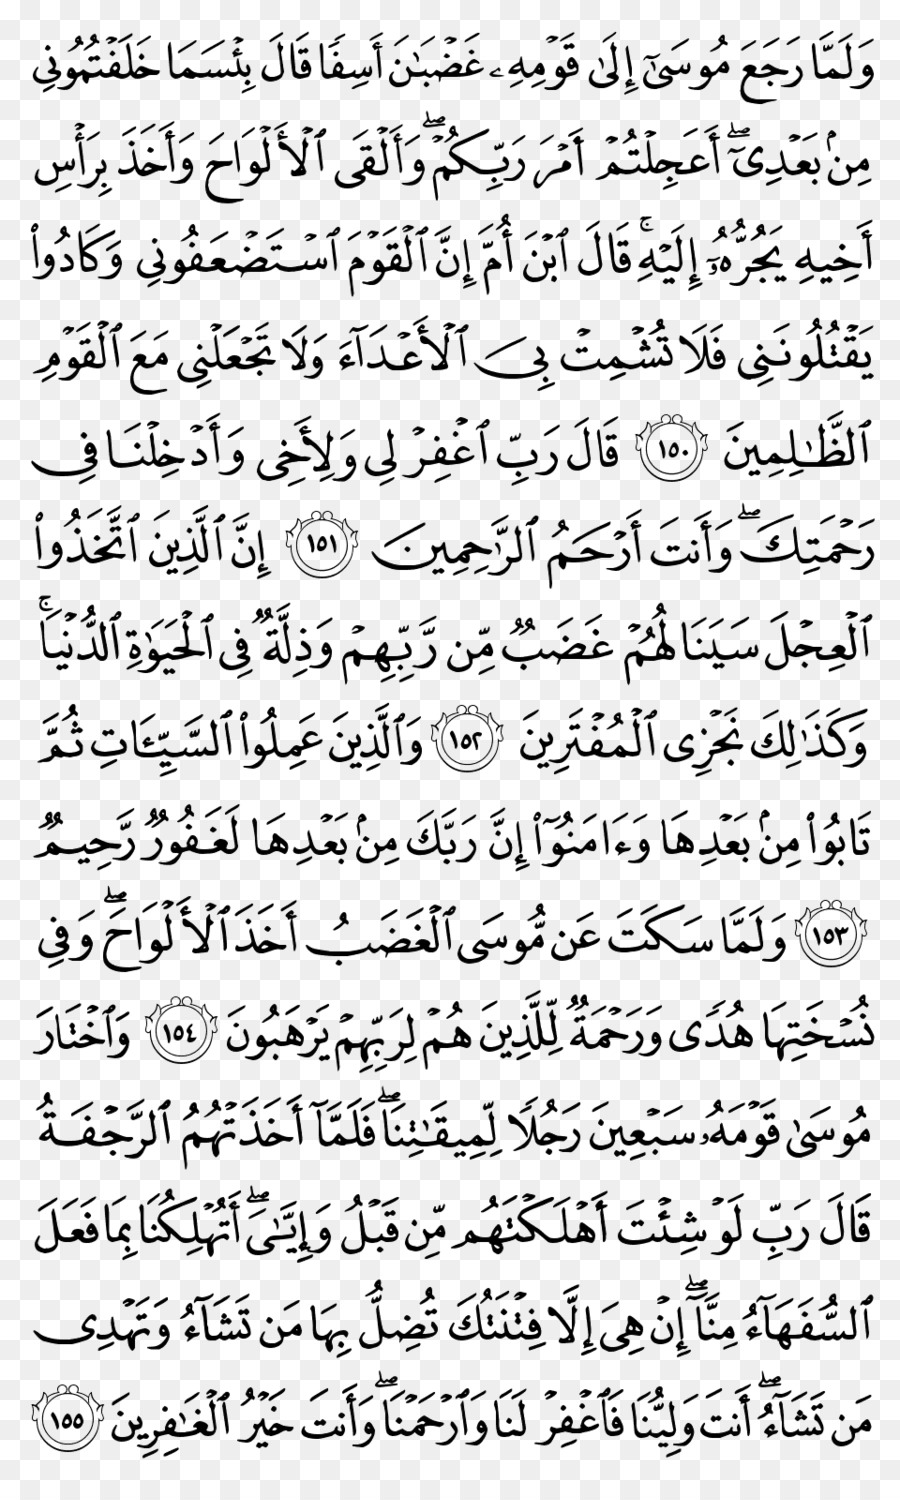 Quran Sure Salah Juz Traurig - Quran